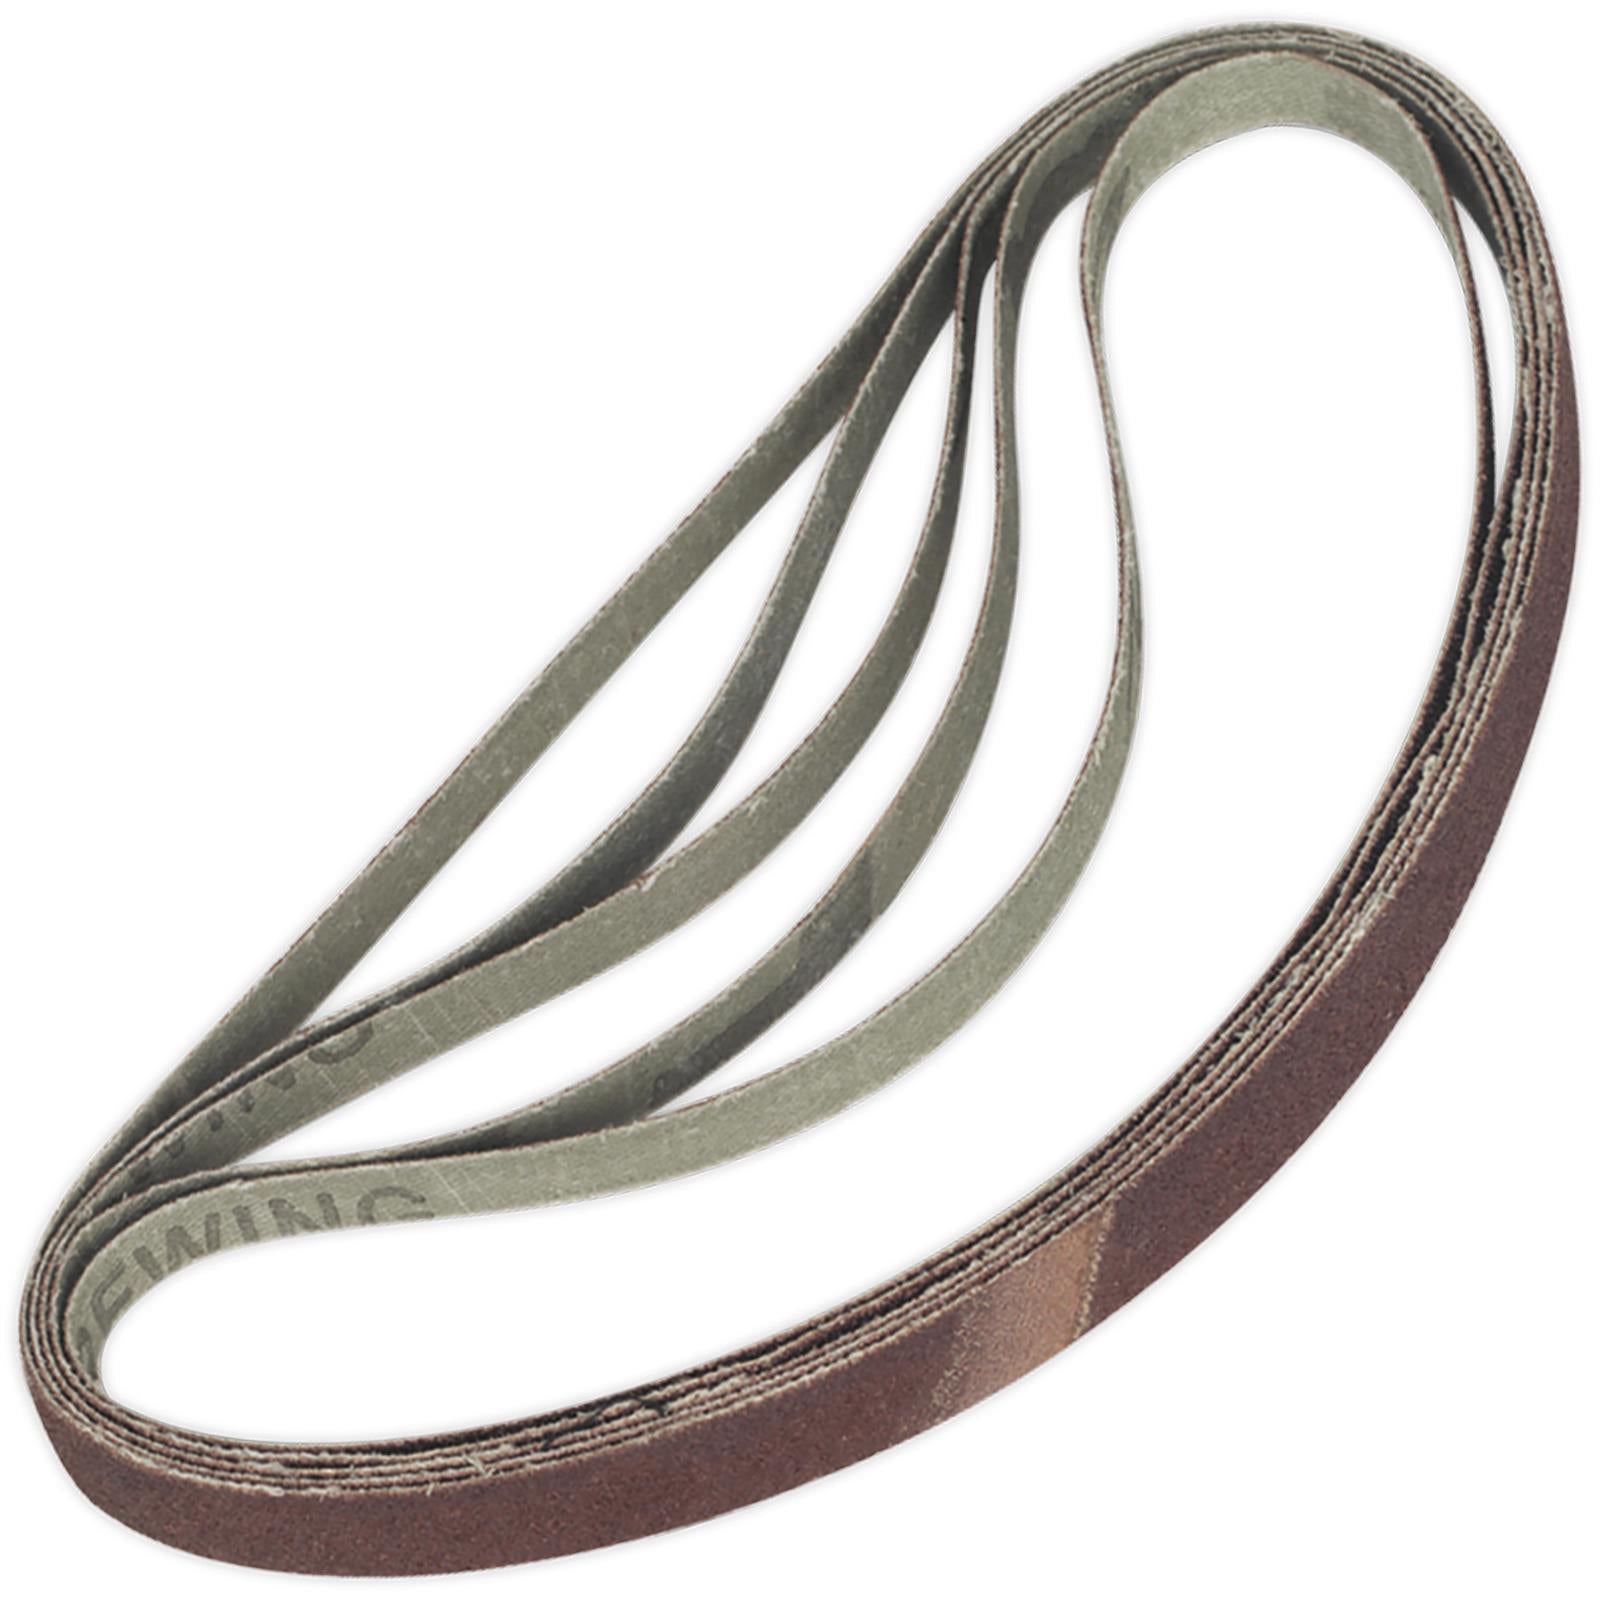 Sealey Sanding Belt 12mm x 456mm Pack of 5 Belts